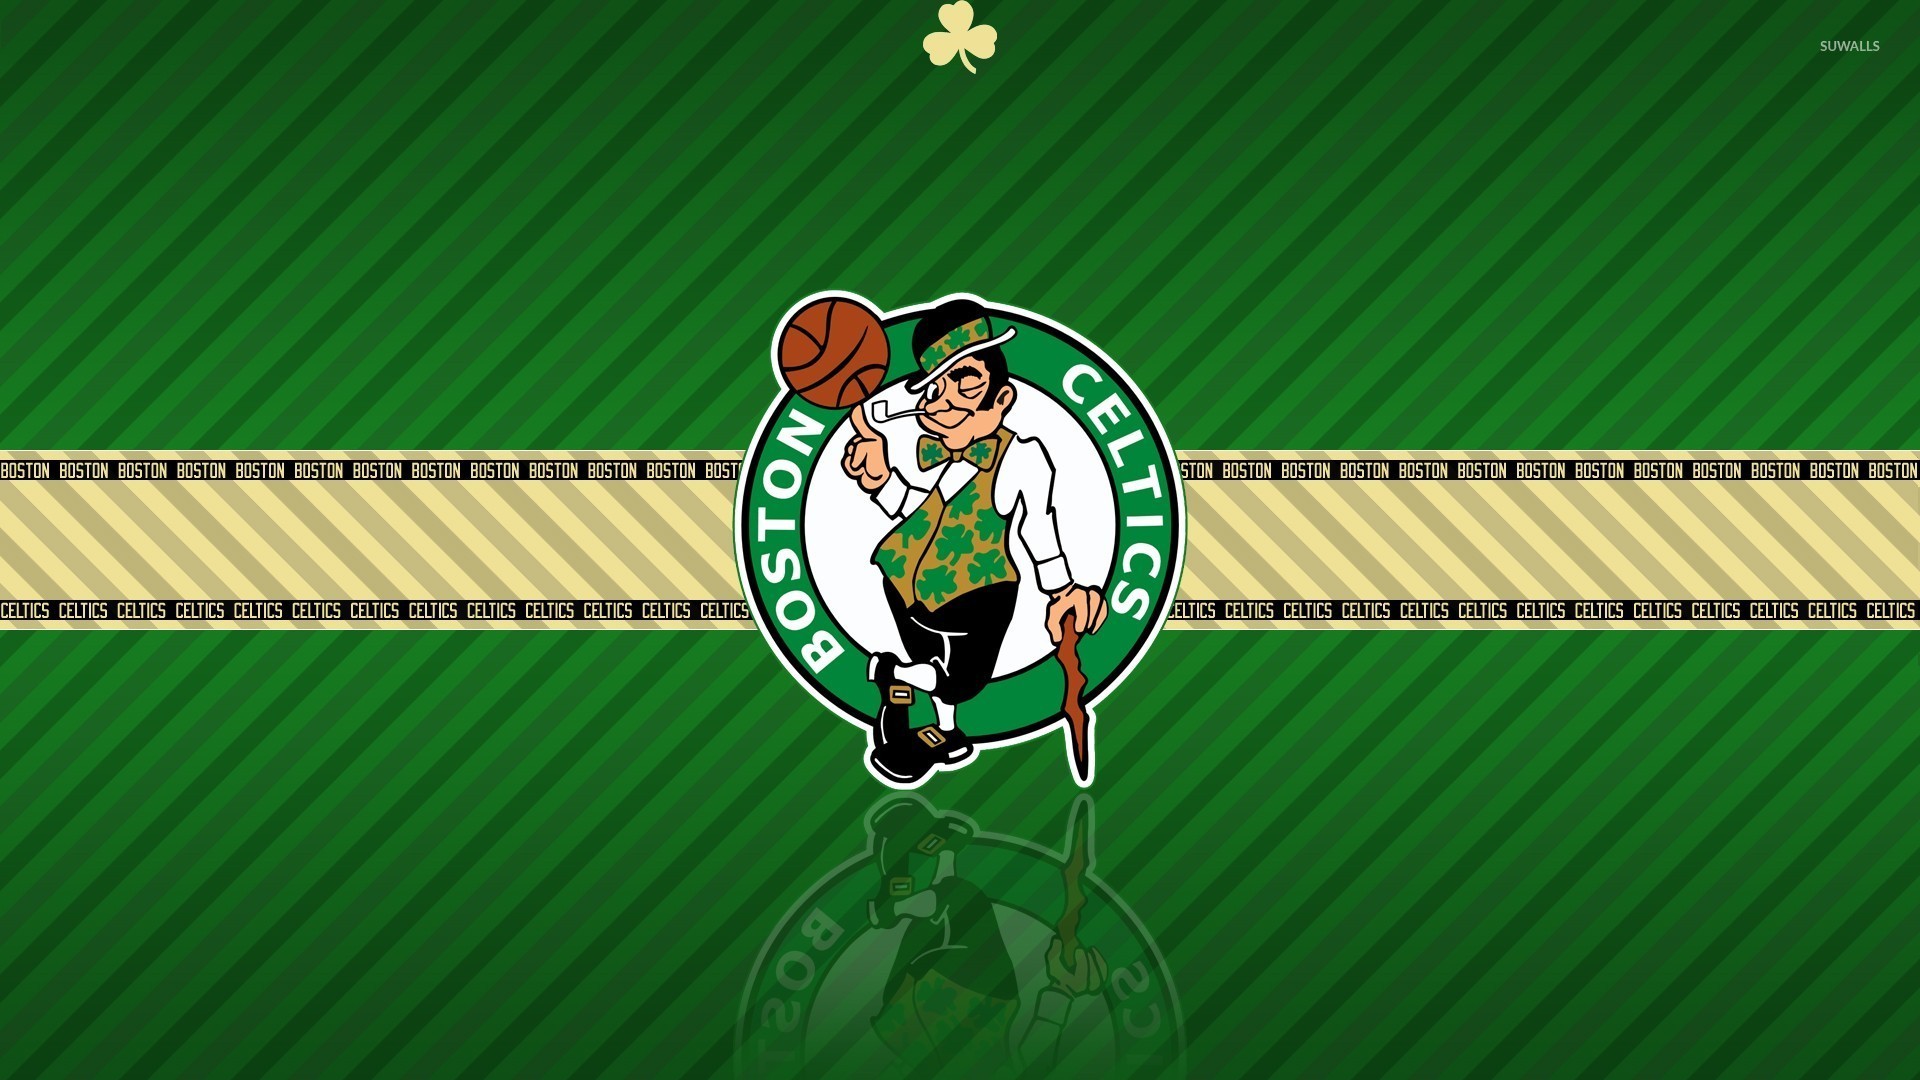 1920x1080 Boston Celtics logo wallpaper